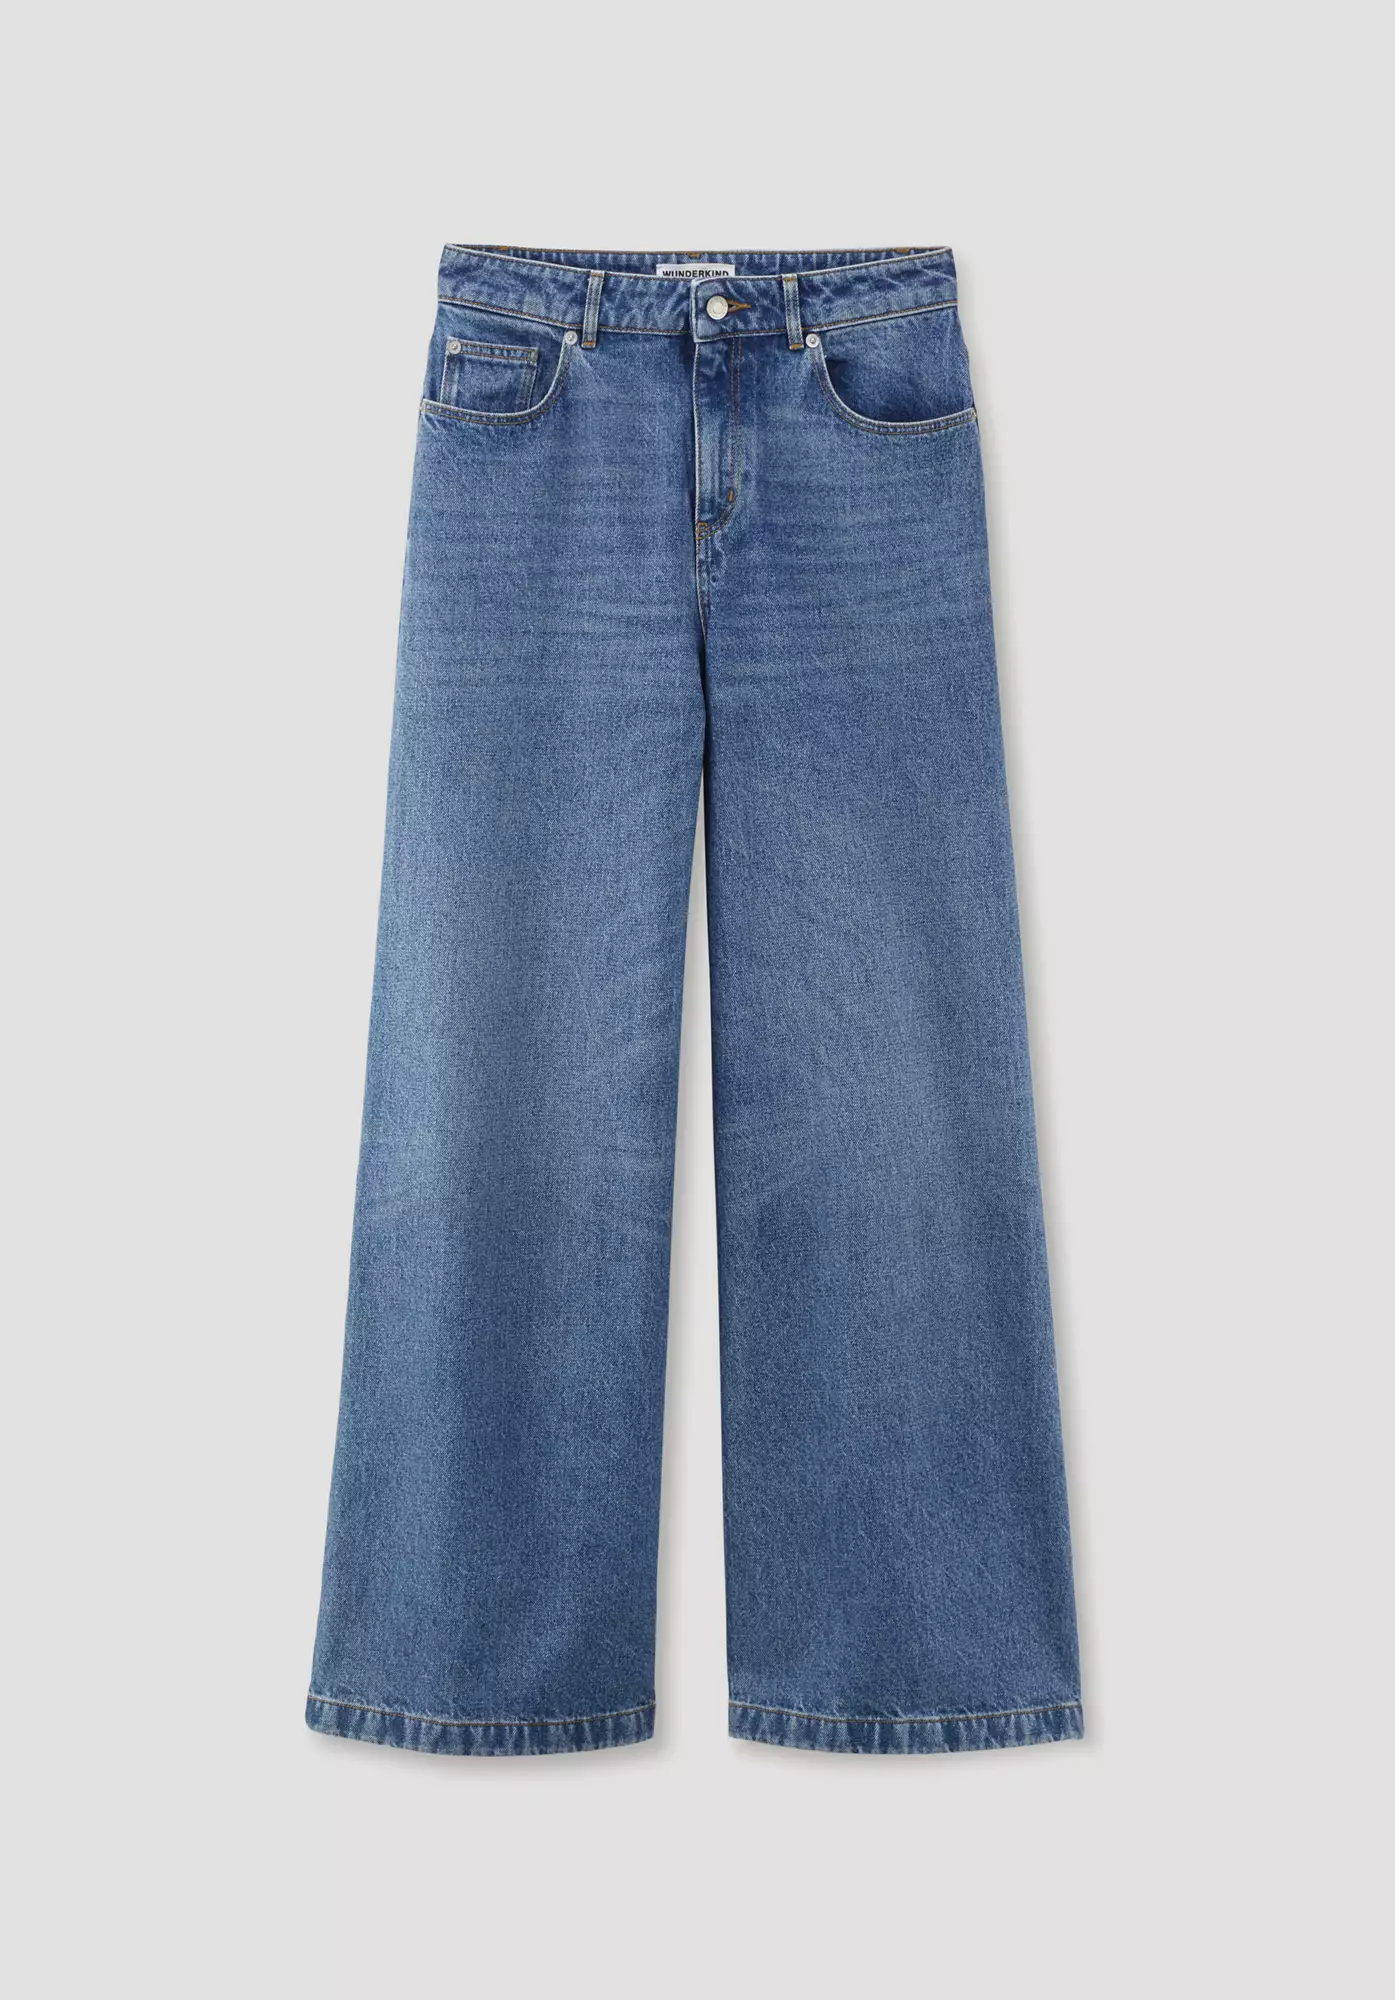 WUNDERKIND X HESSNATUR jeans high rise flared made of pure organic denim - 4